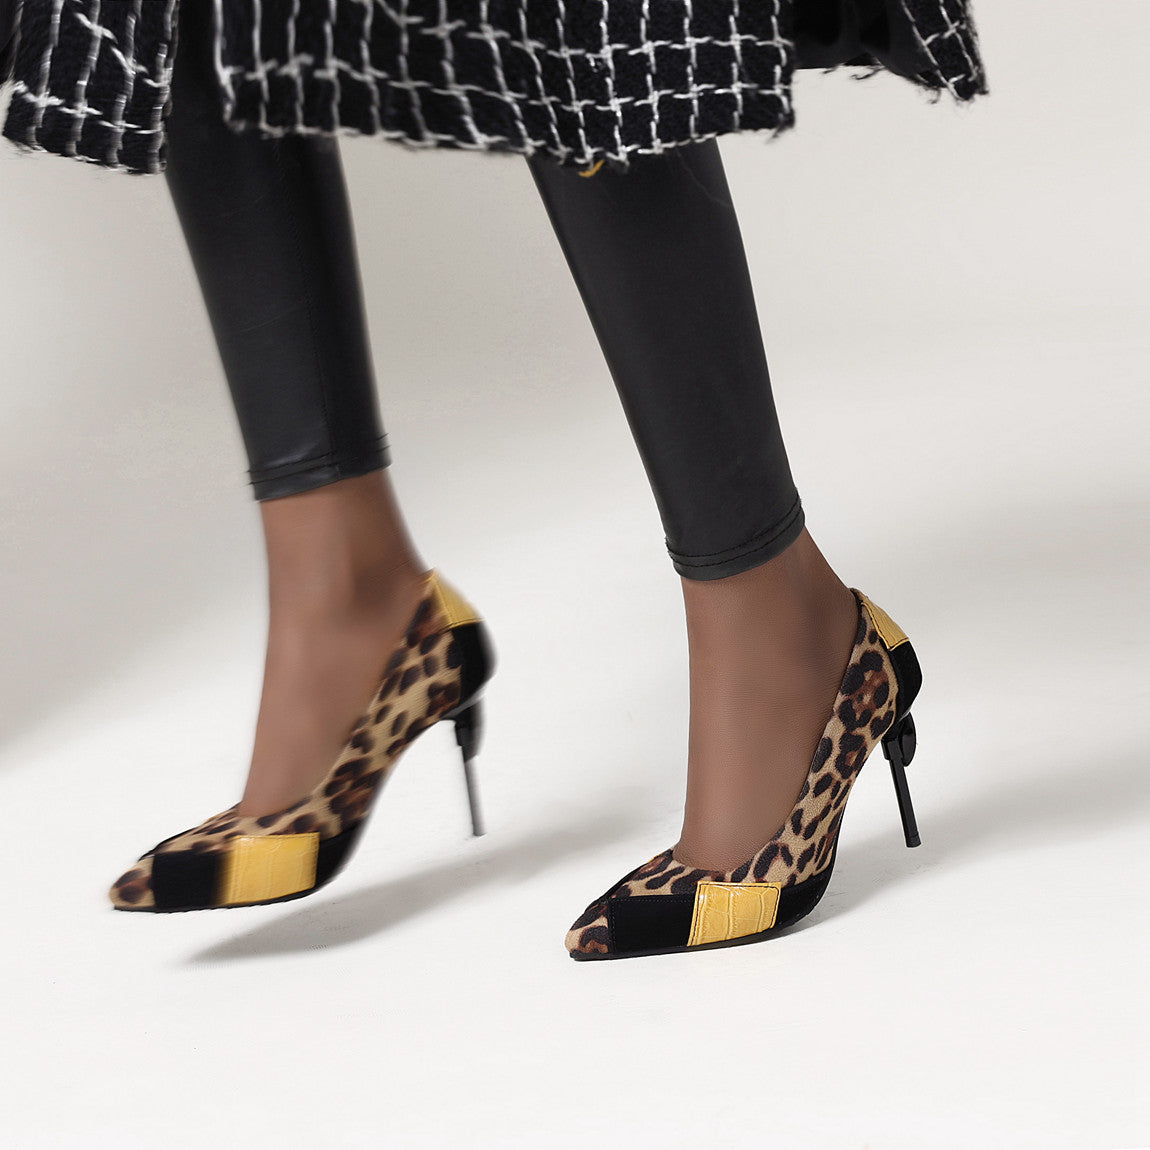 Bigsizeheels Stylish Leopard Slip-On Stiletto Heel Pointed Toe Sexy Thin Shoes - Black Leopard freeshipping - bigsizeheel®-size5-size15 -All Plus Sizes Available!